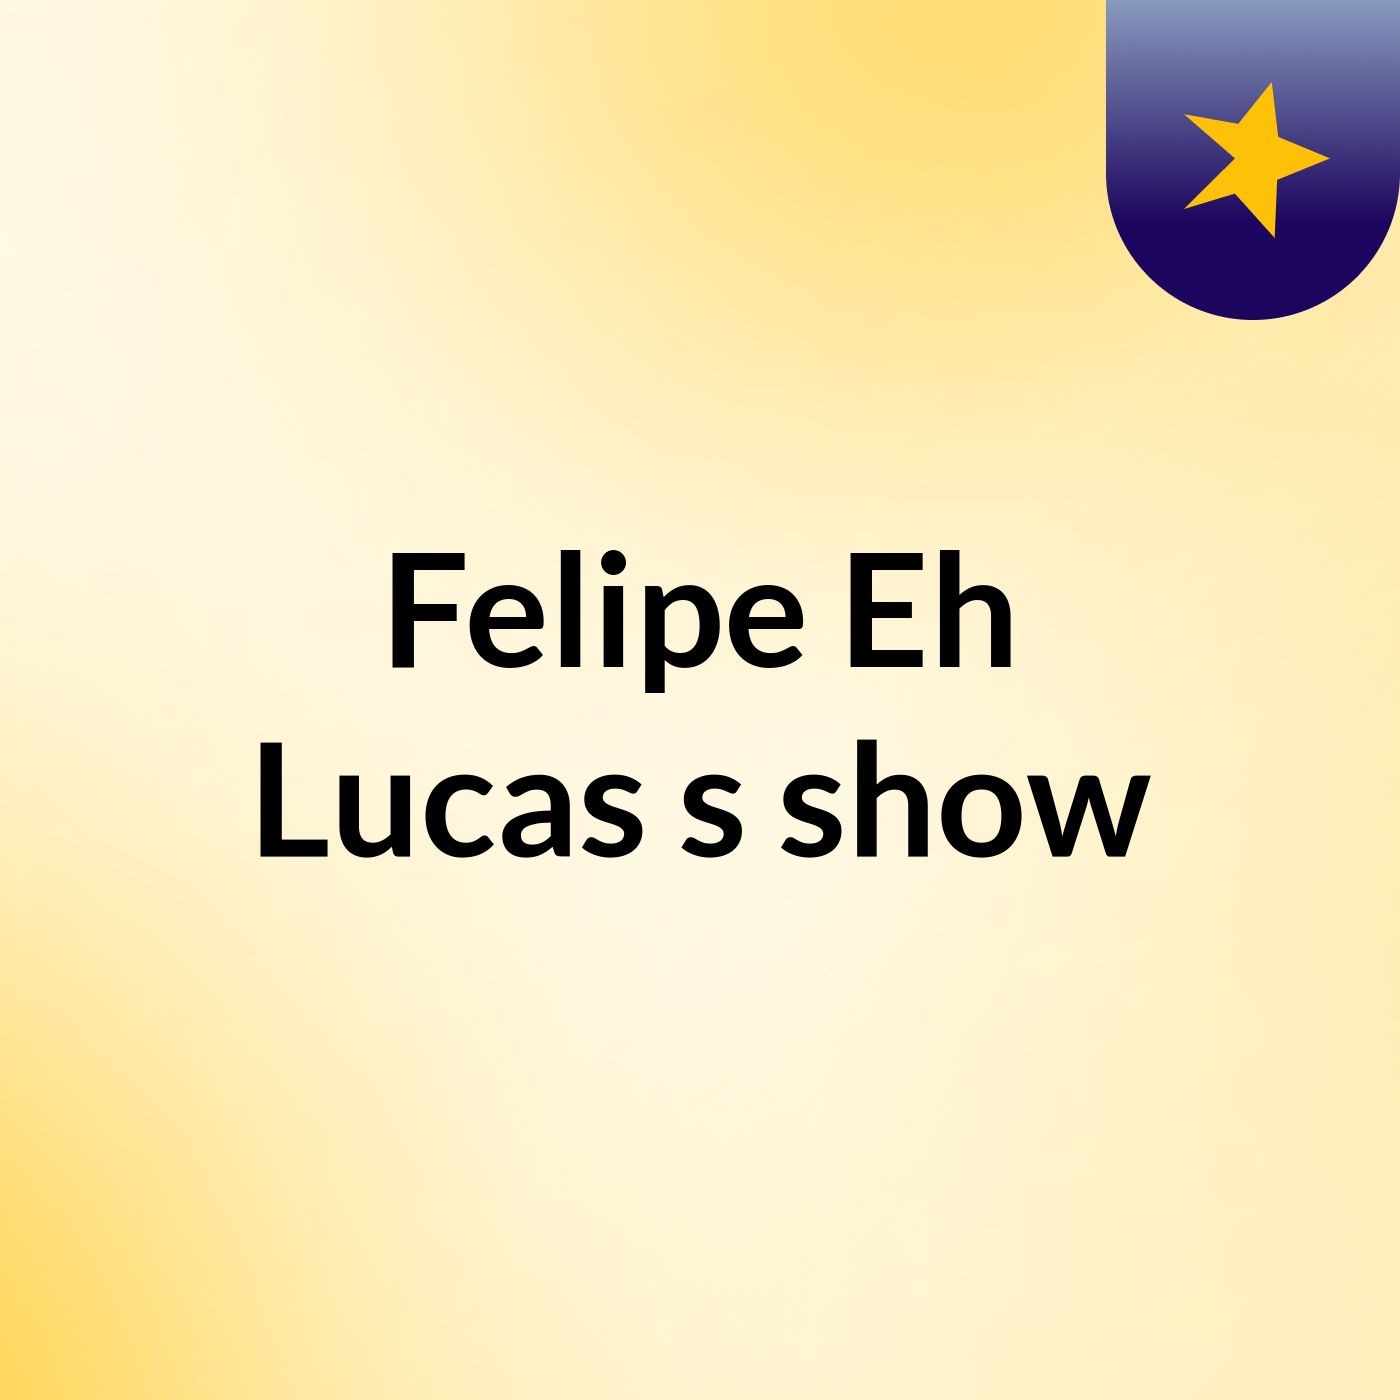 Felipe Eh Lucas's show